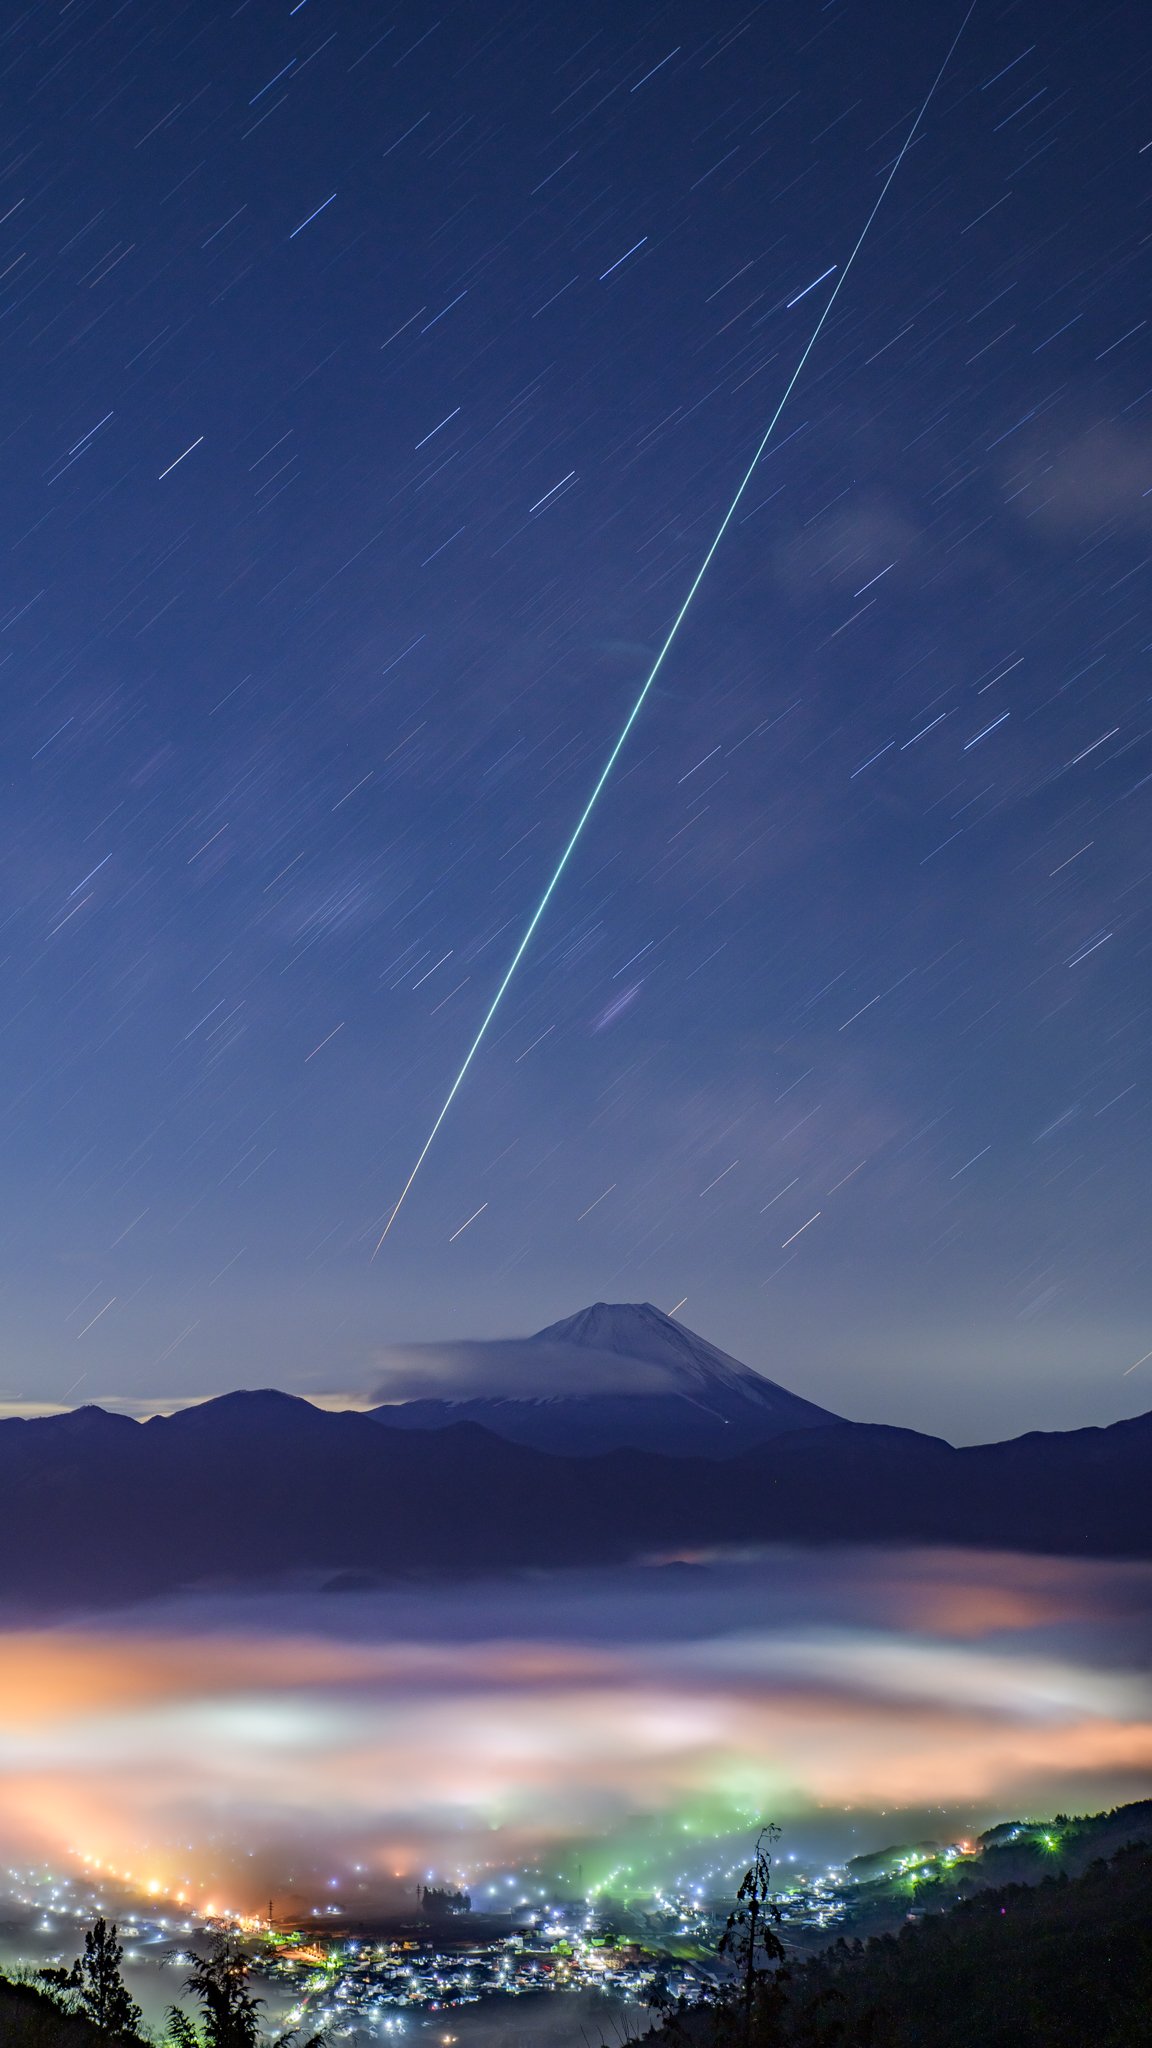 Kazuyuki Matsui 3 14 大火球と富士山 午前2時47分に流れた大火球 超縦長 待受サイズ の写真です タップして頂き スマホ画面いっぱいで長大な流れ星をお楽しみ下さい 甲府盆地の虹色雲海 富士山 流星と感動の一瞬でした 富士山 火球 流星